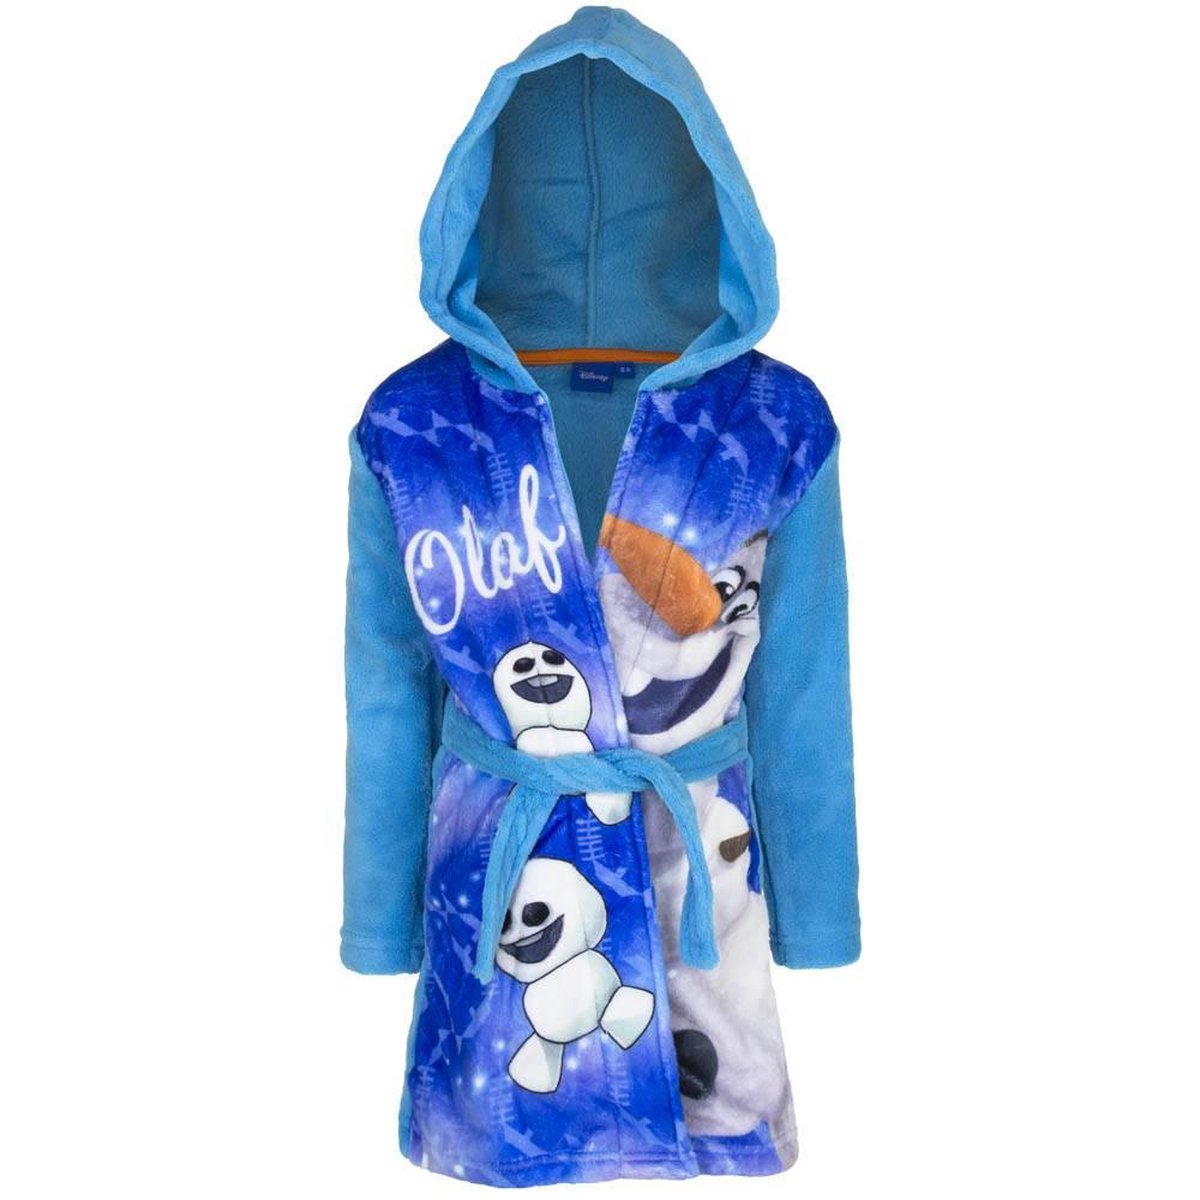 Frozen Olaf licht blauwe badjas maat 116 | bol.com